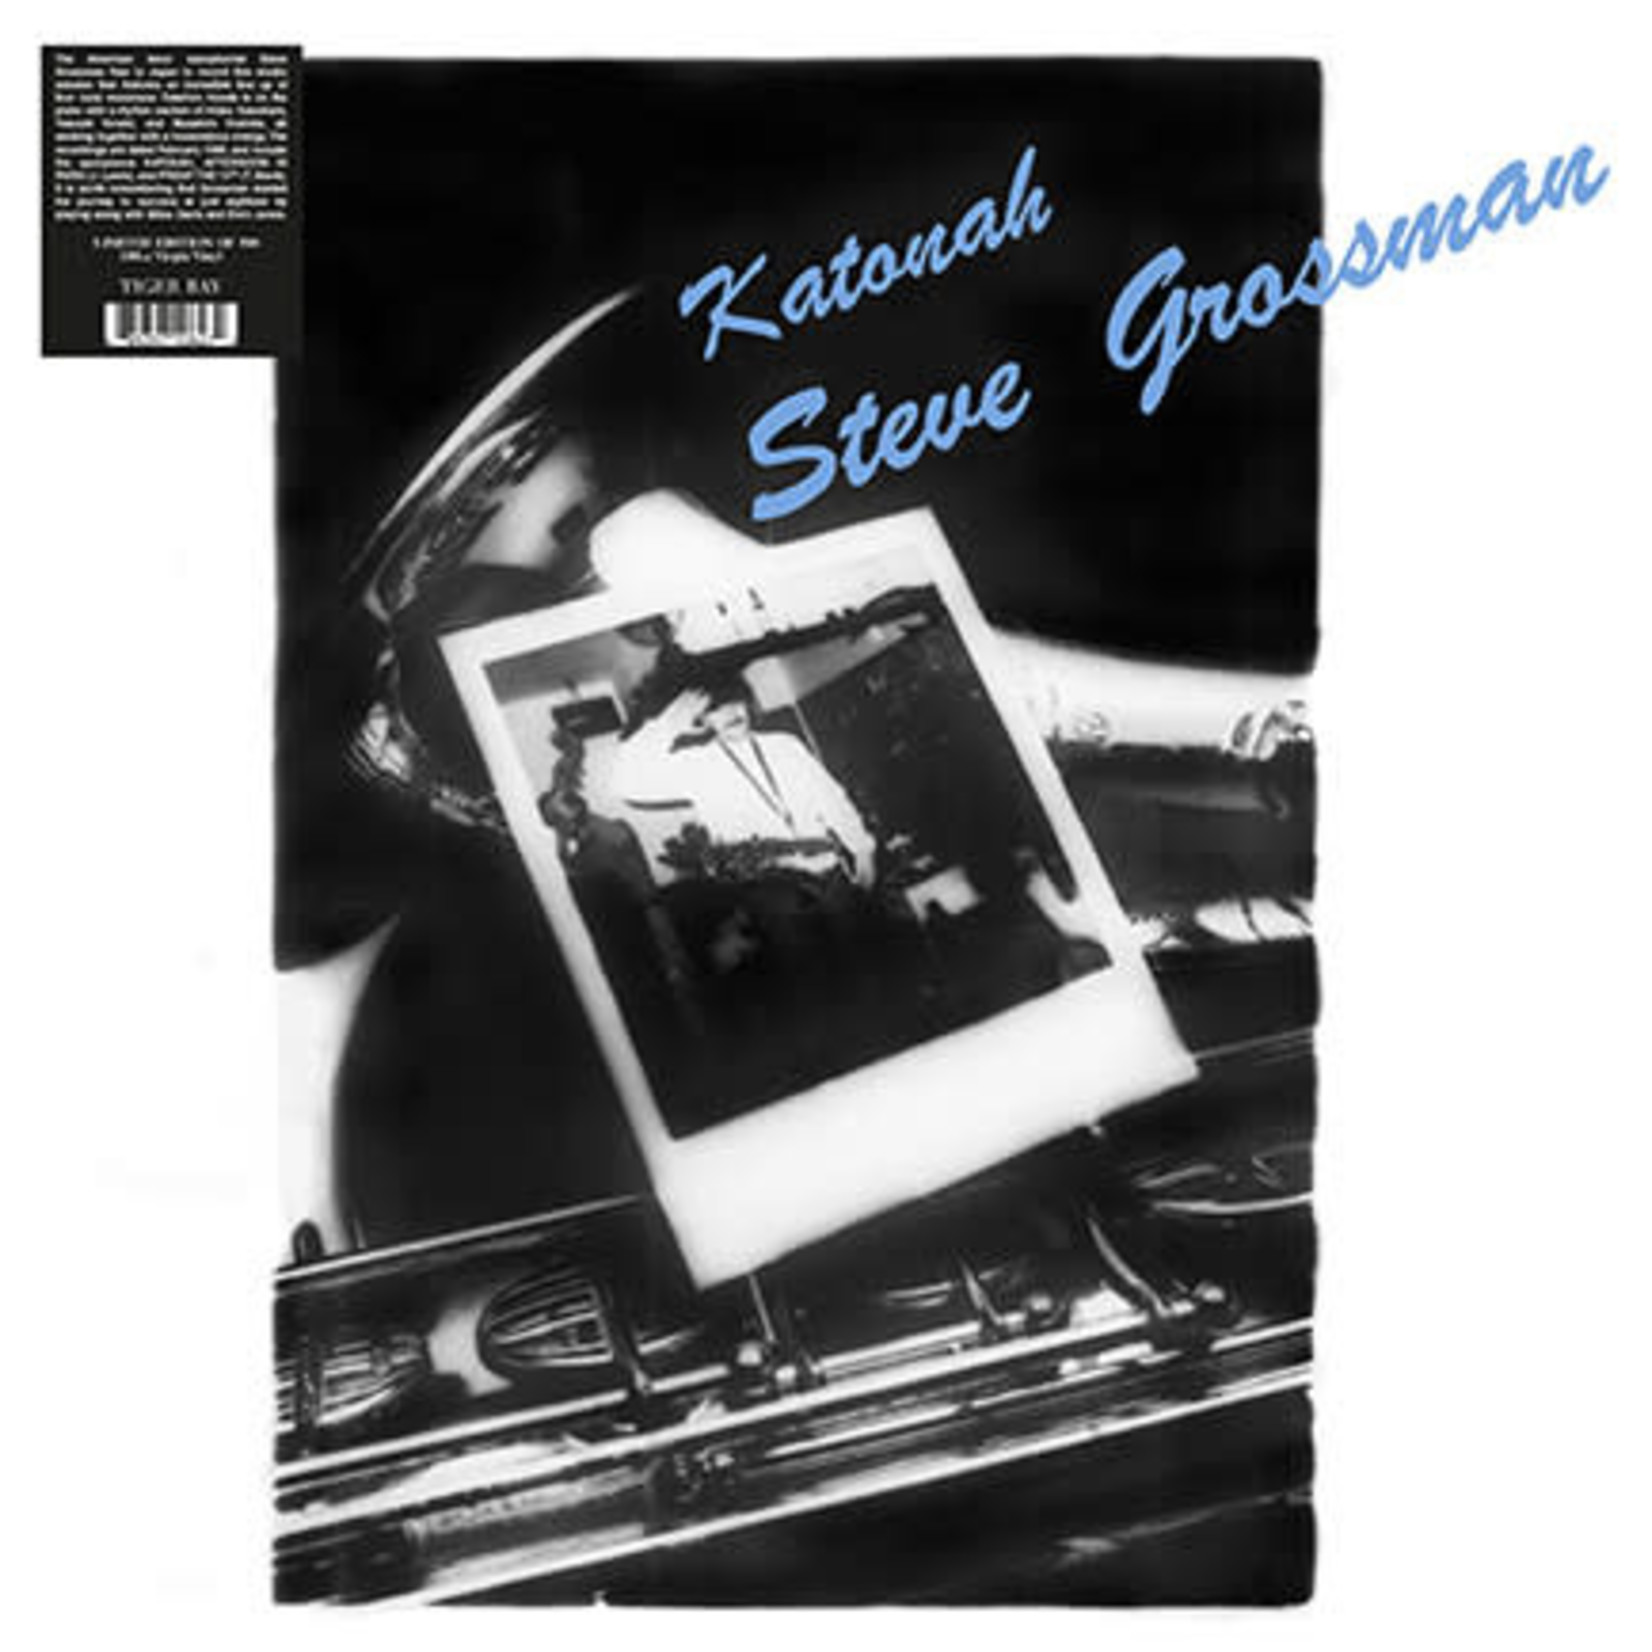 Tiger Bay Steve Grossman - Katonah (LP)